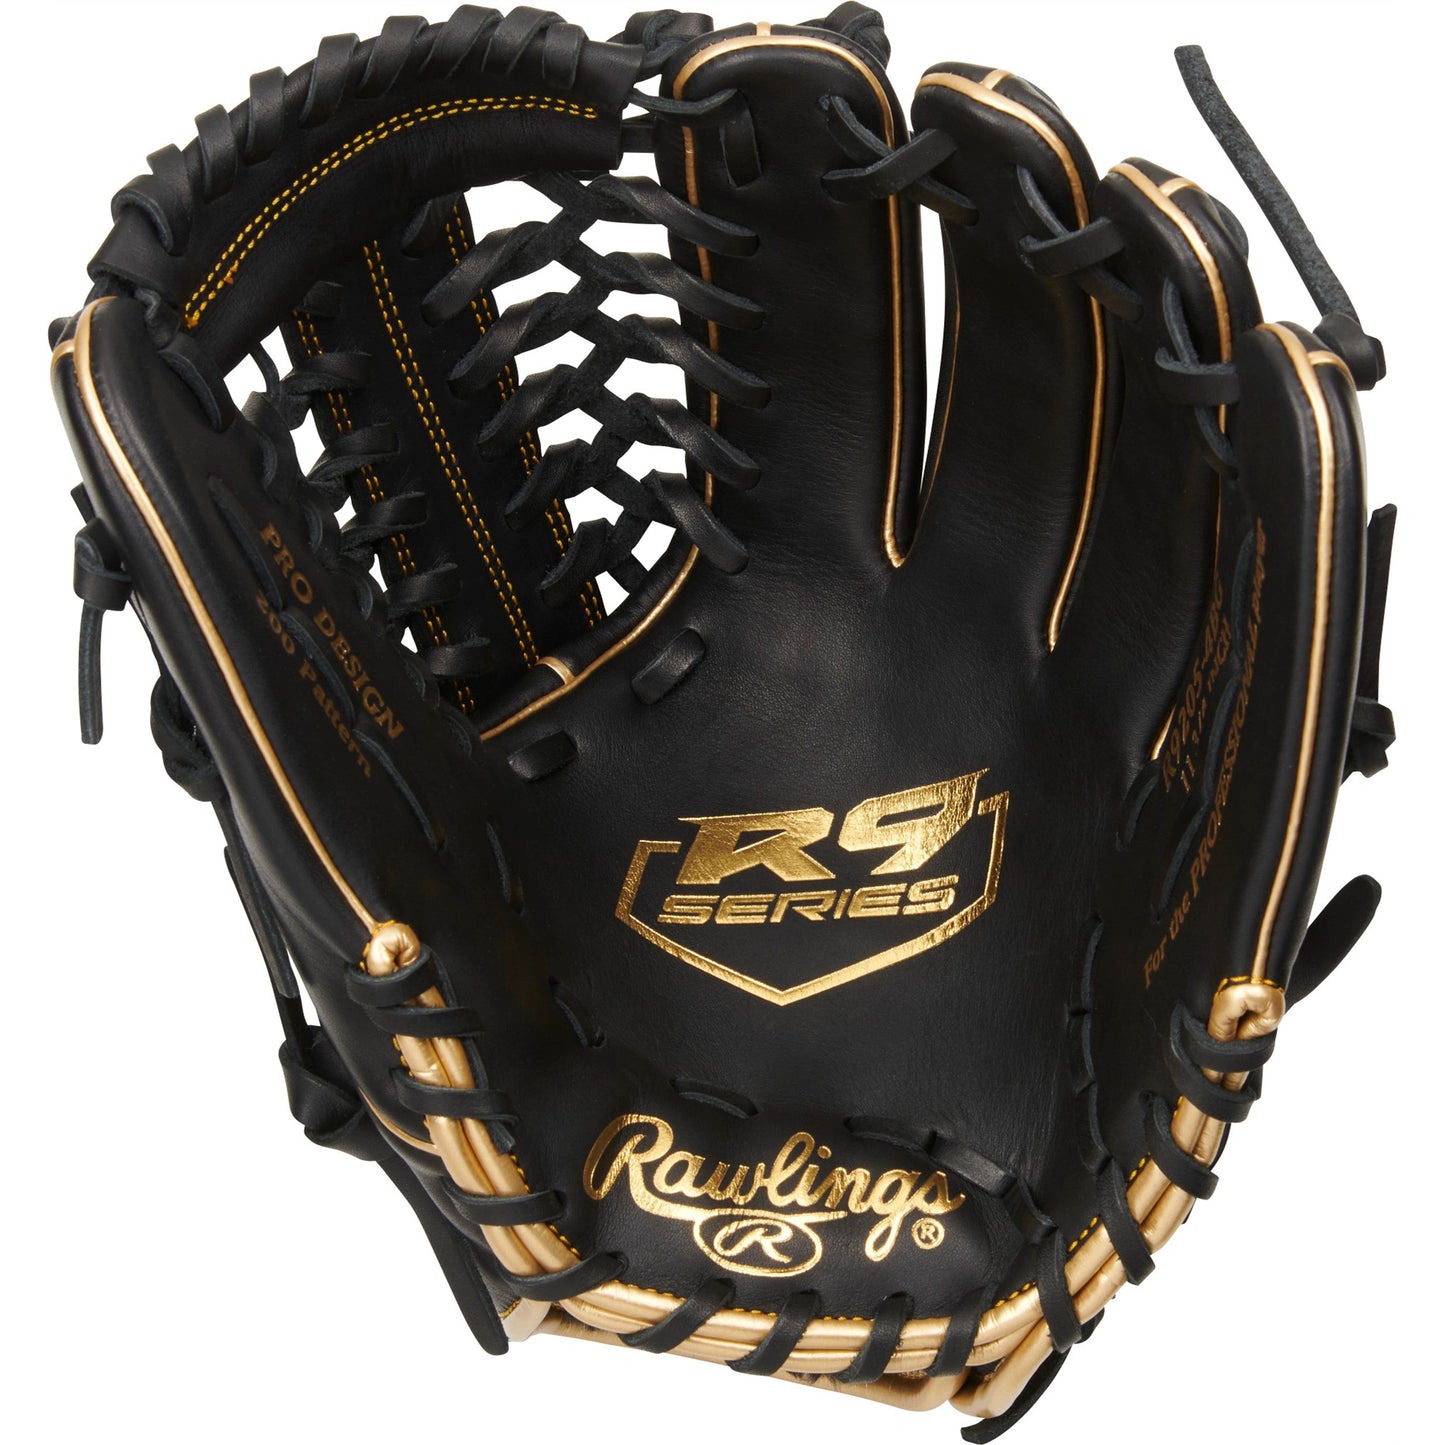 Rawlings (R9205-4BG) R9 Series 11.75" Baseball/Softball Glove